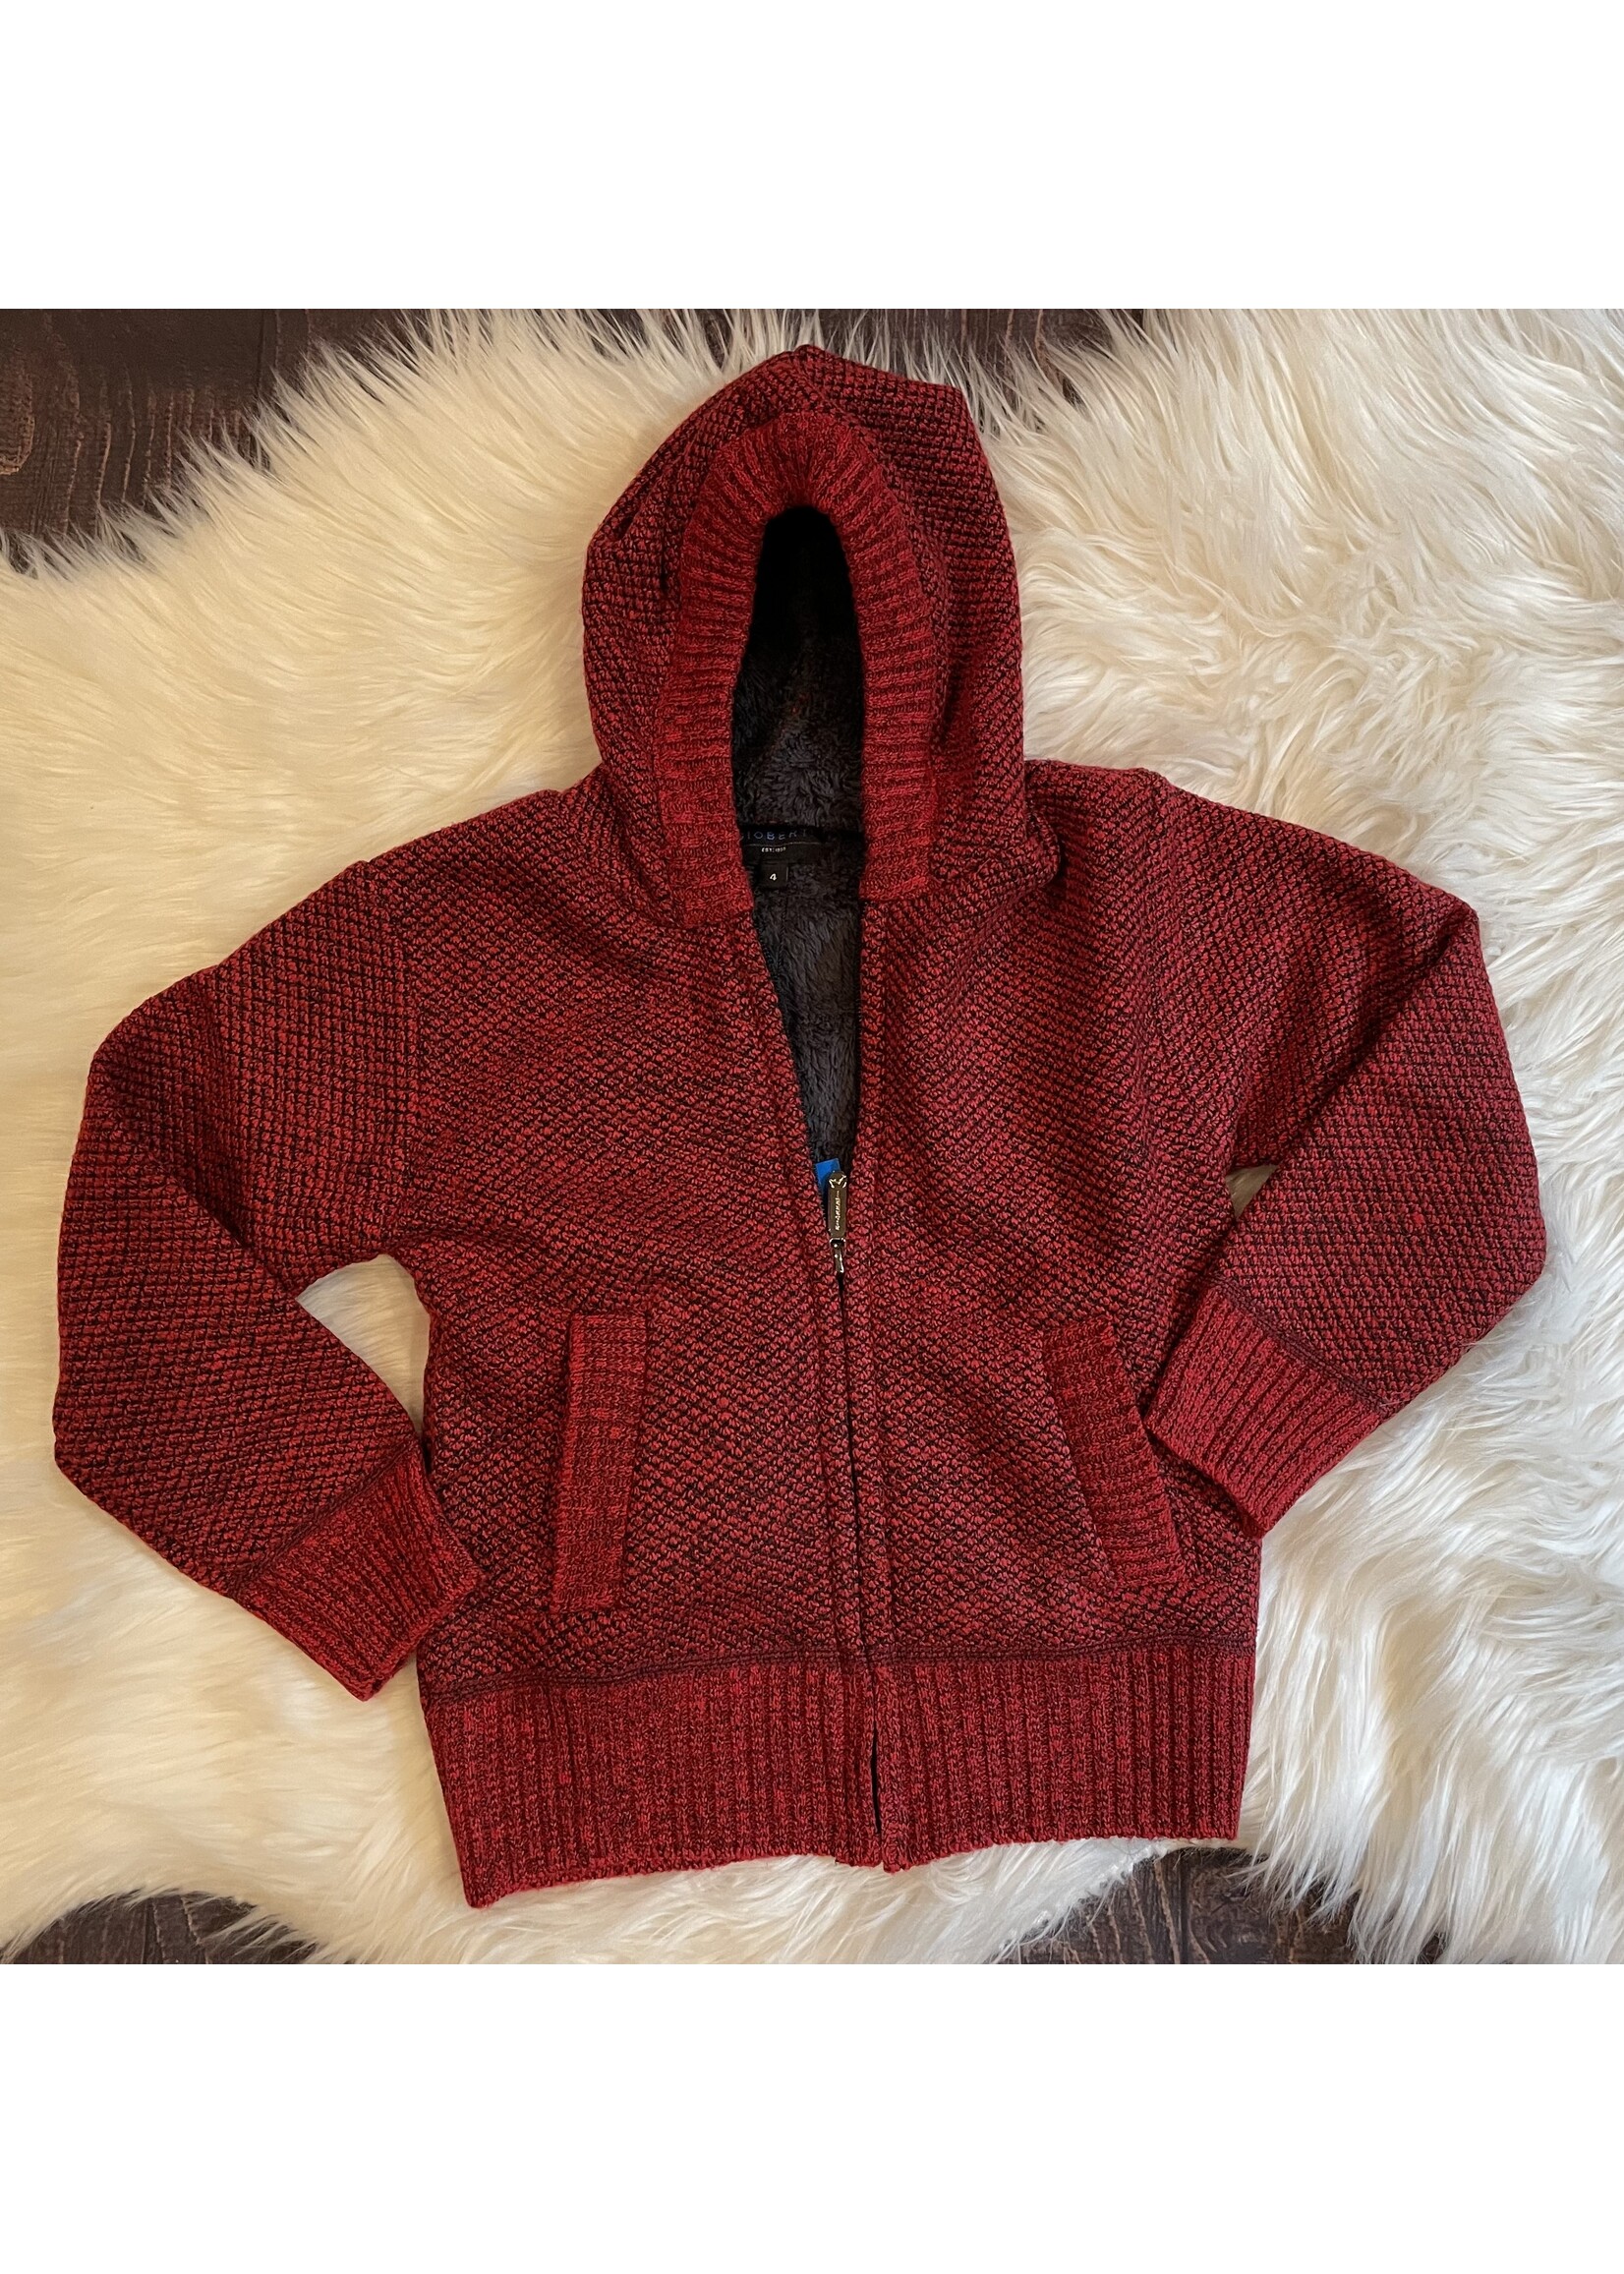 Boys Red Full Zip Knit Sweater